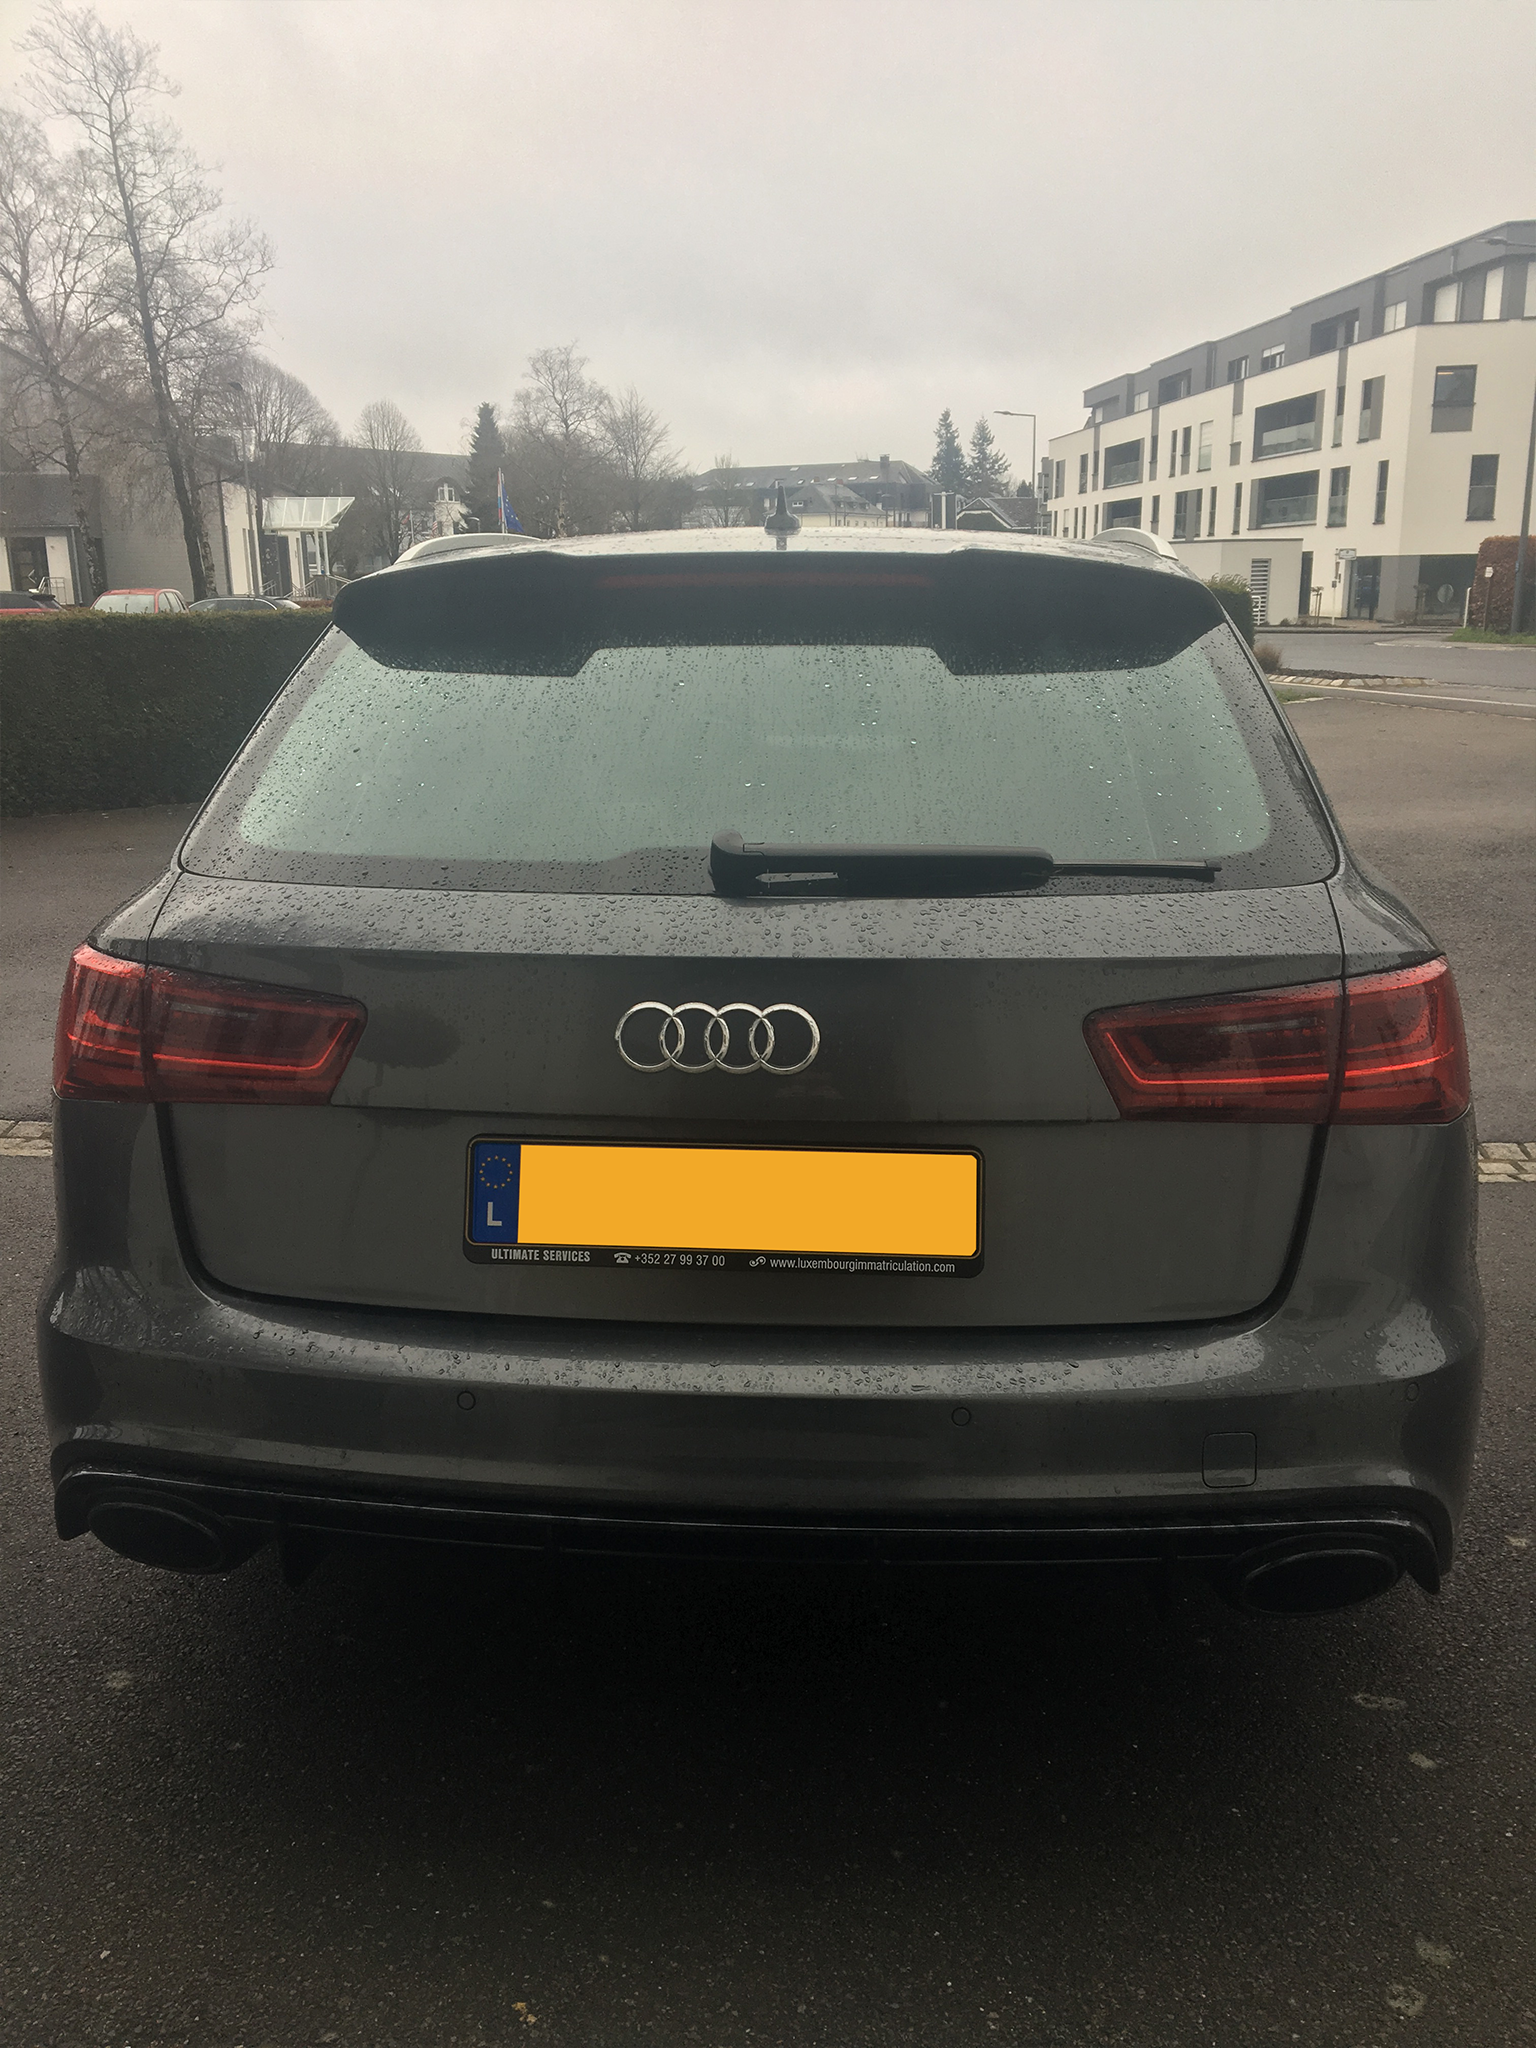 location Audi Luxembourg